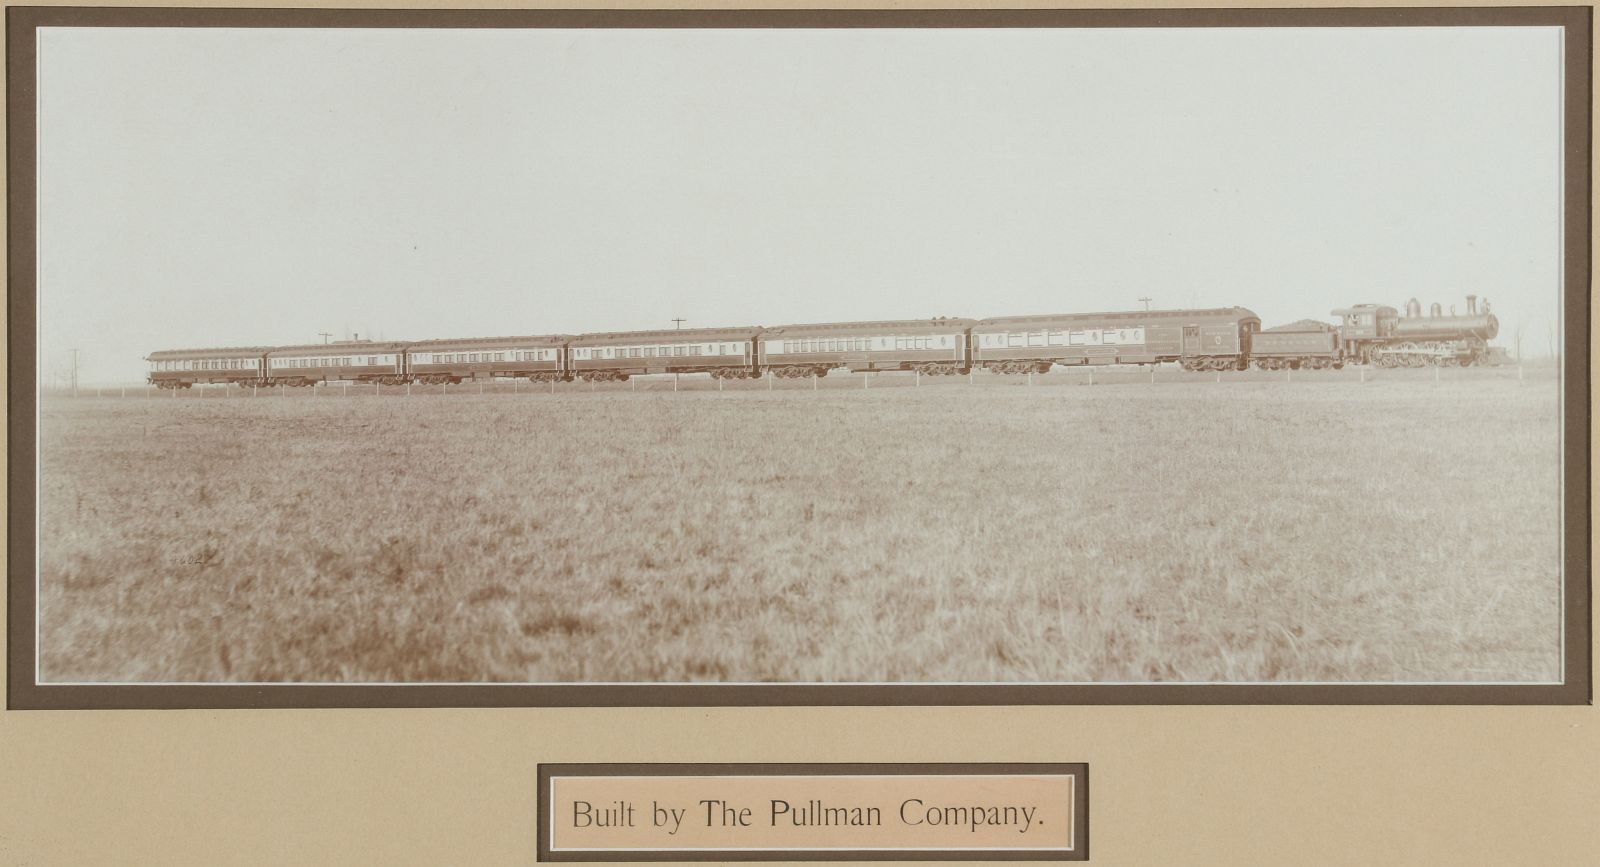 A PULLMAN COMPANY BUILDER'S PHOTO CIRCA 1890/1900